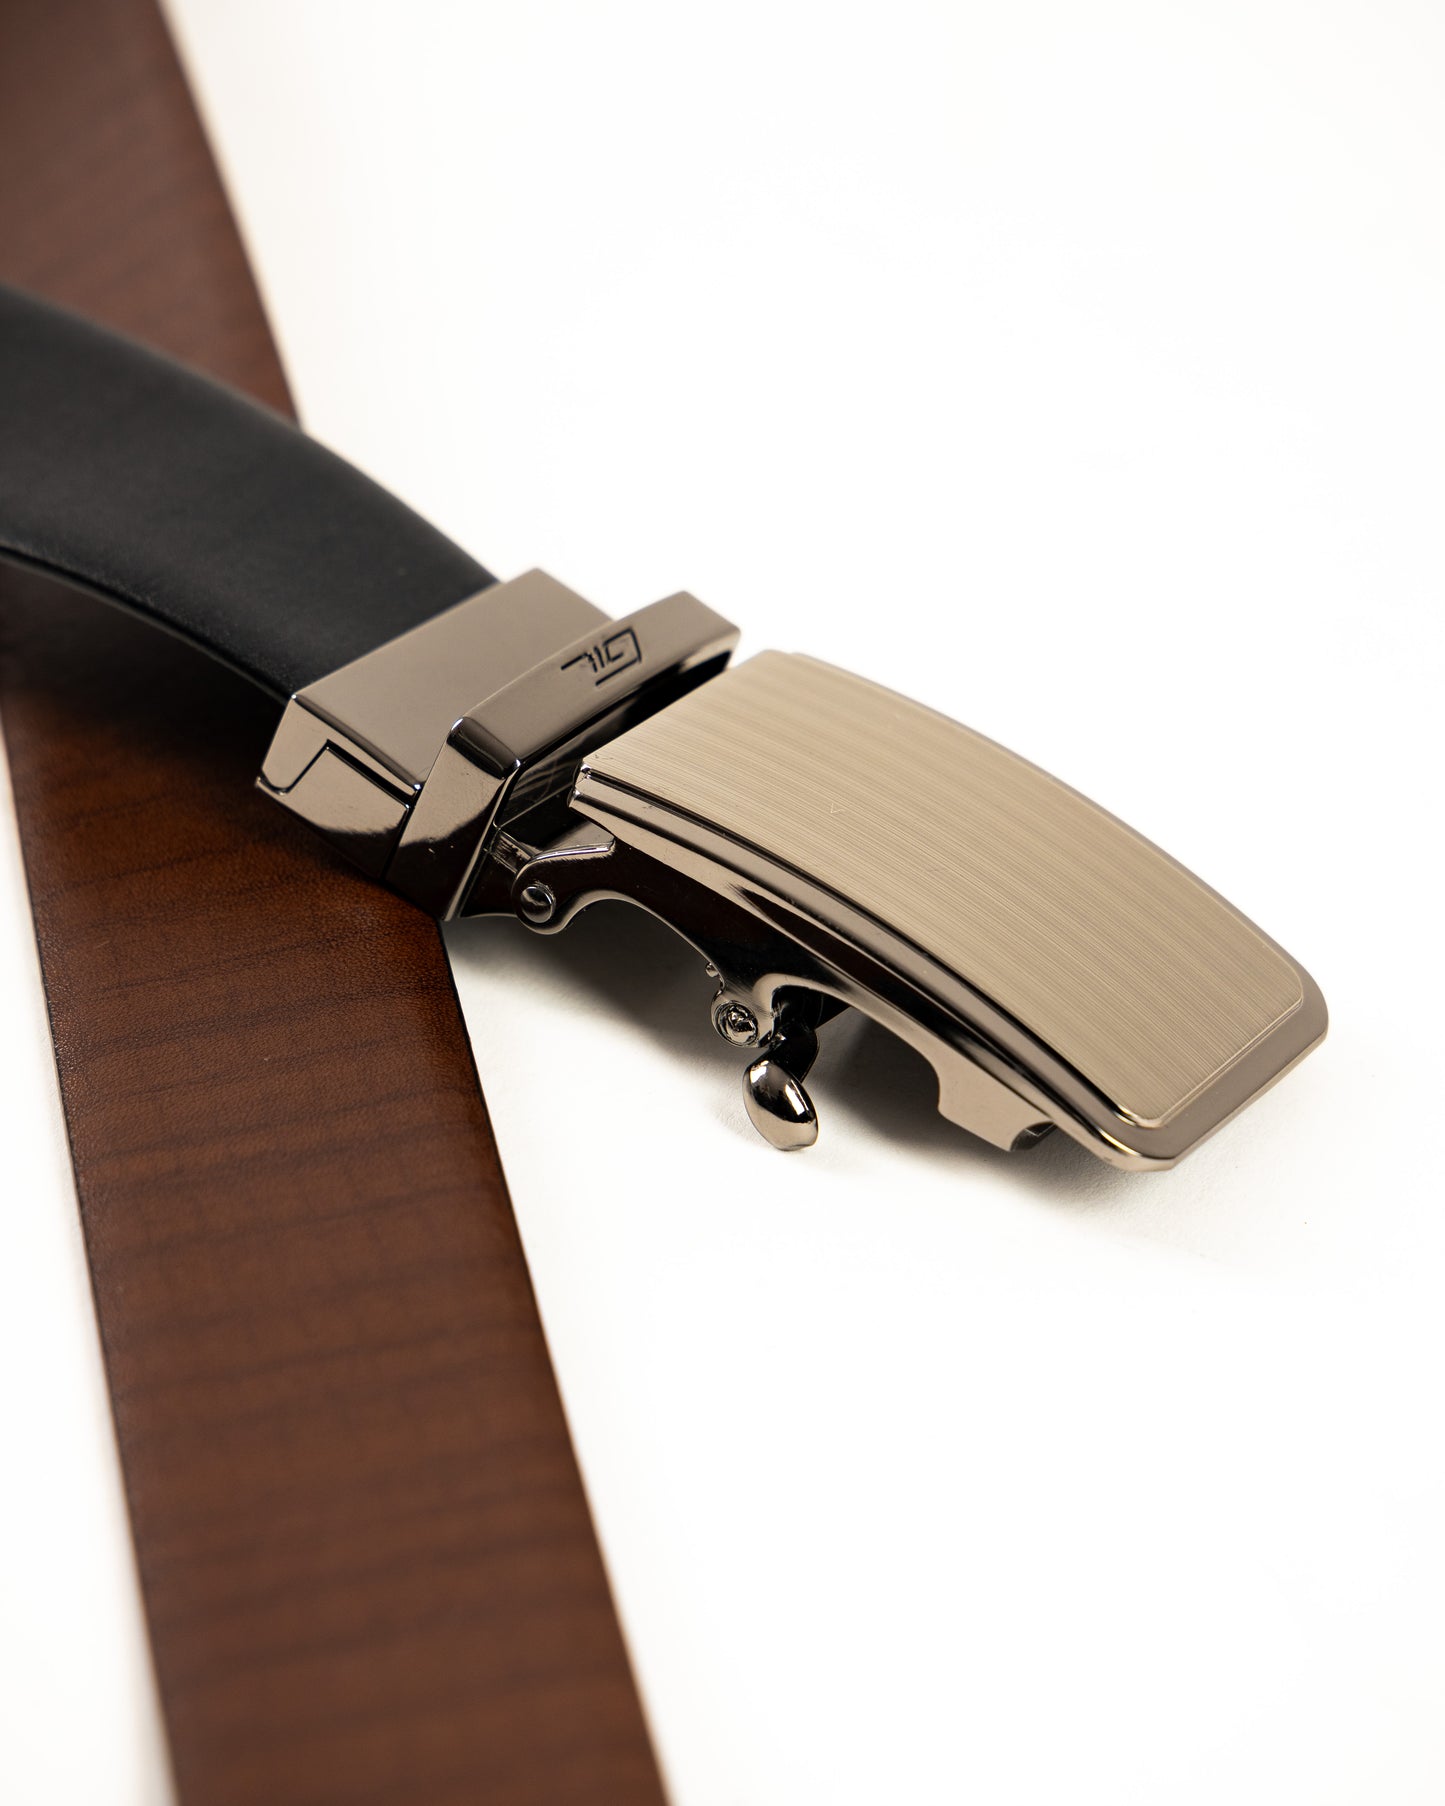 REV. 35MM, Auto Turning leather belt